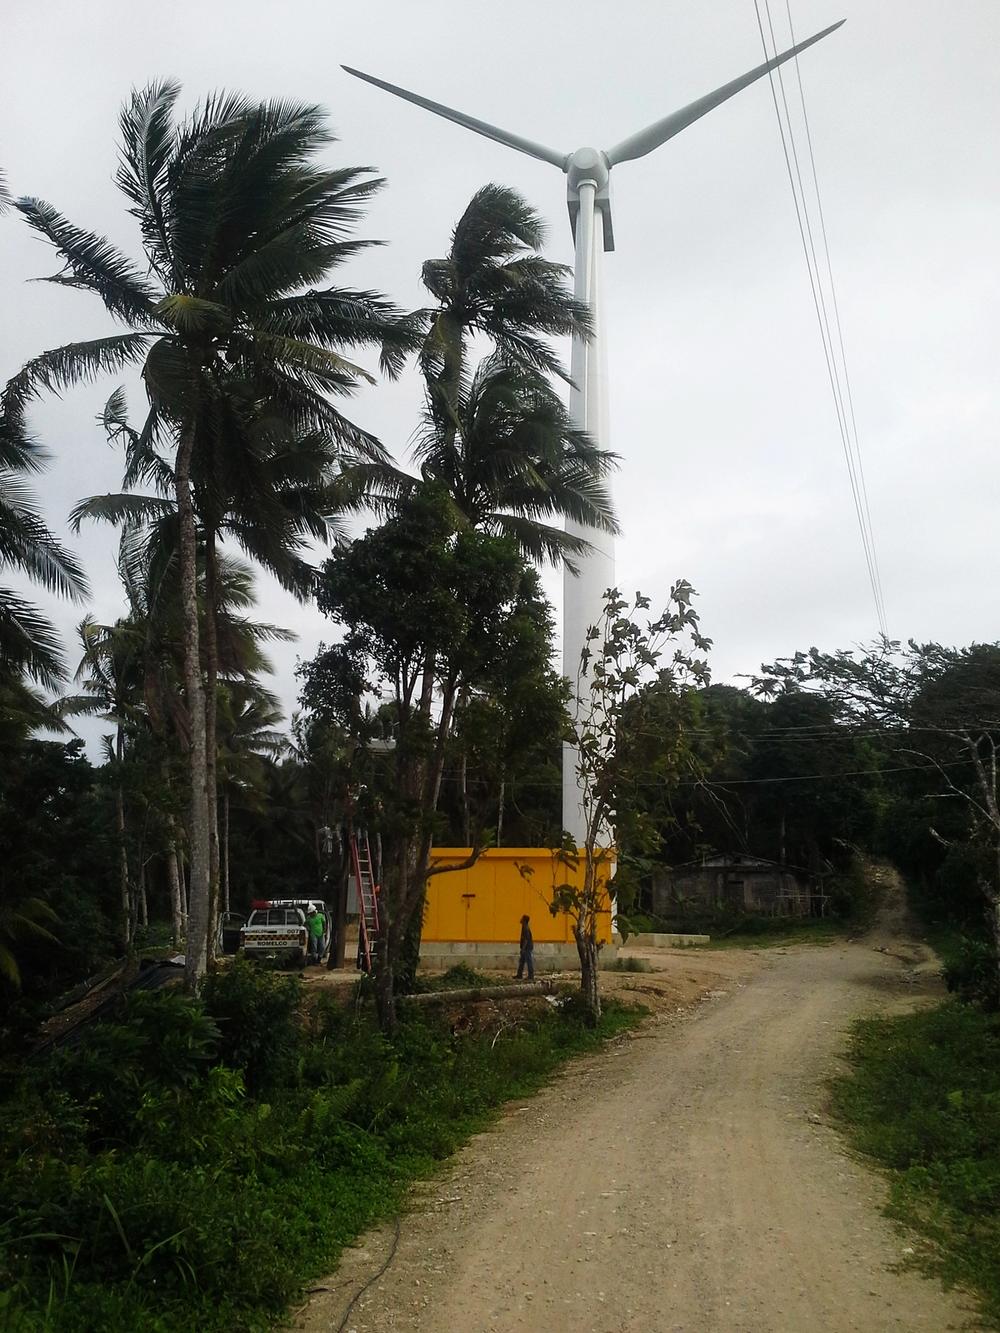 The 300kW Wind Turbine in Romblon, Philippines